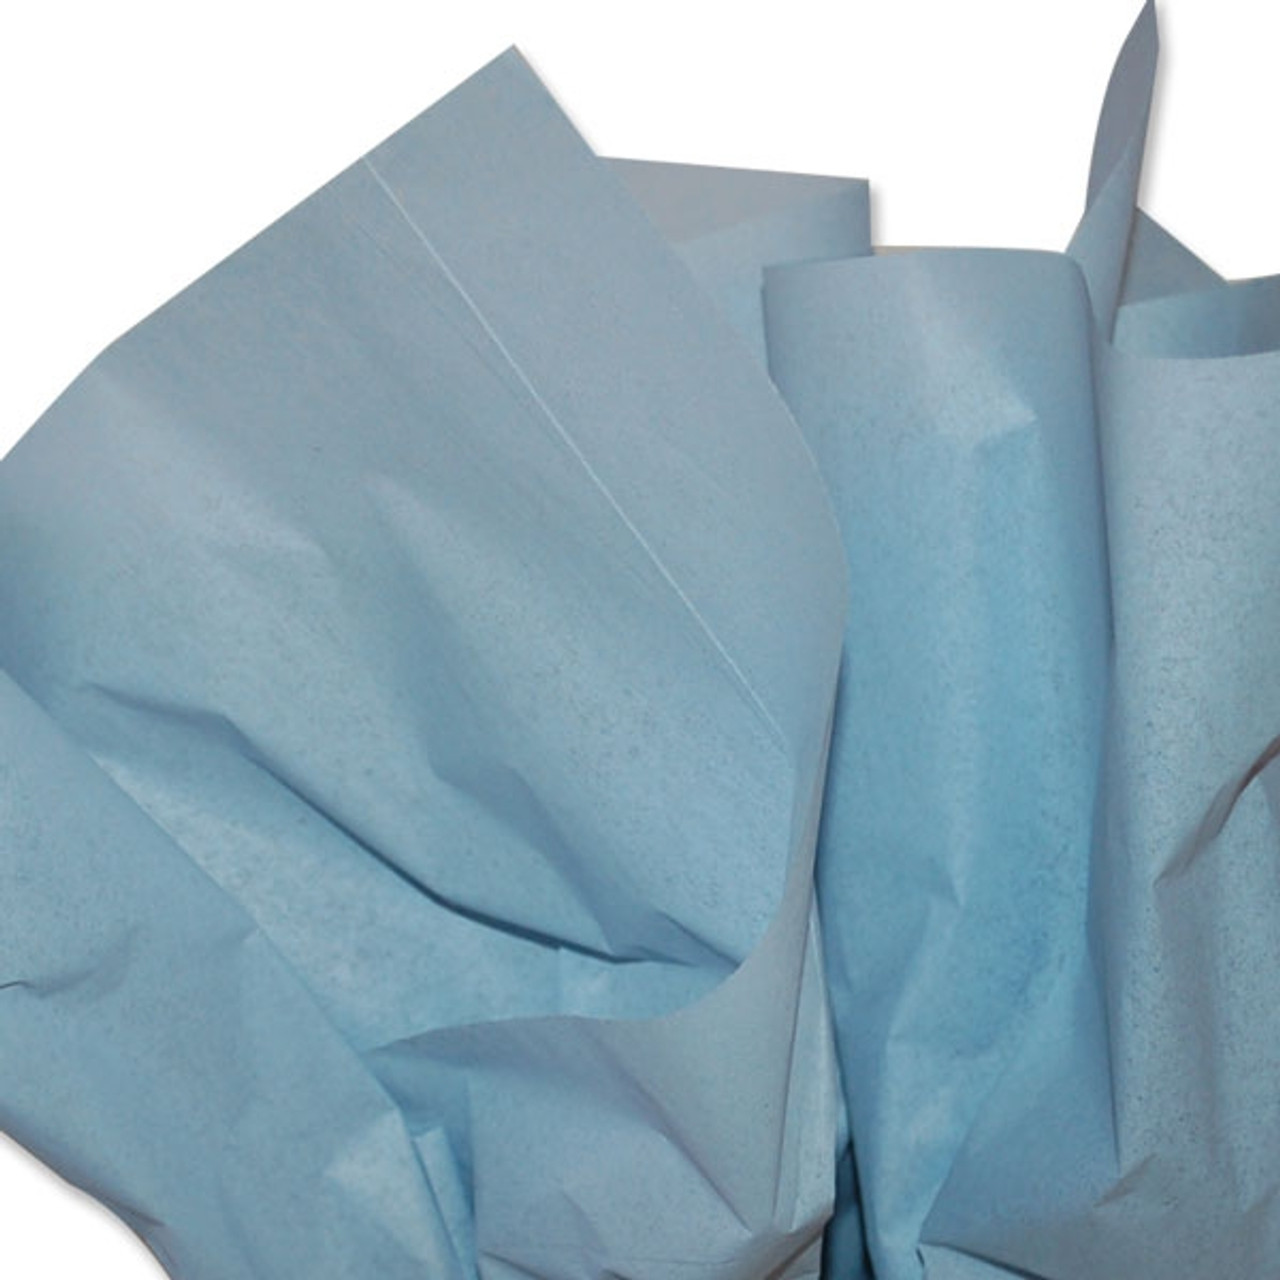 Teal Tissue Paper (20 x 30 per sheet)